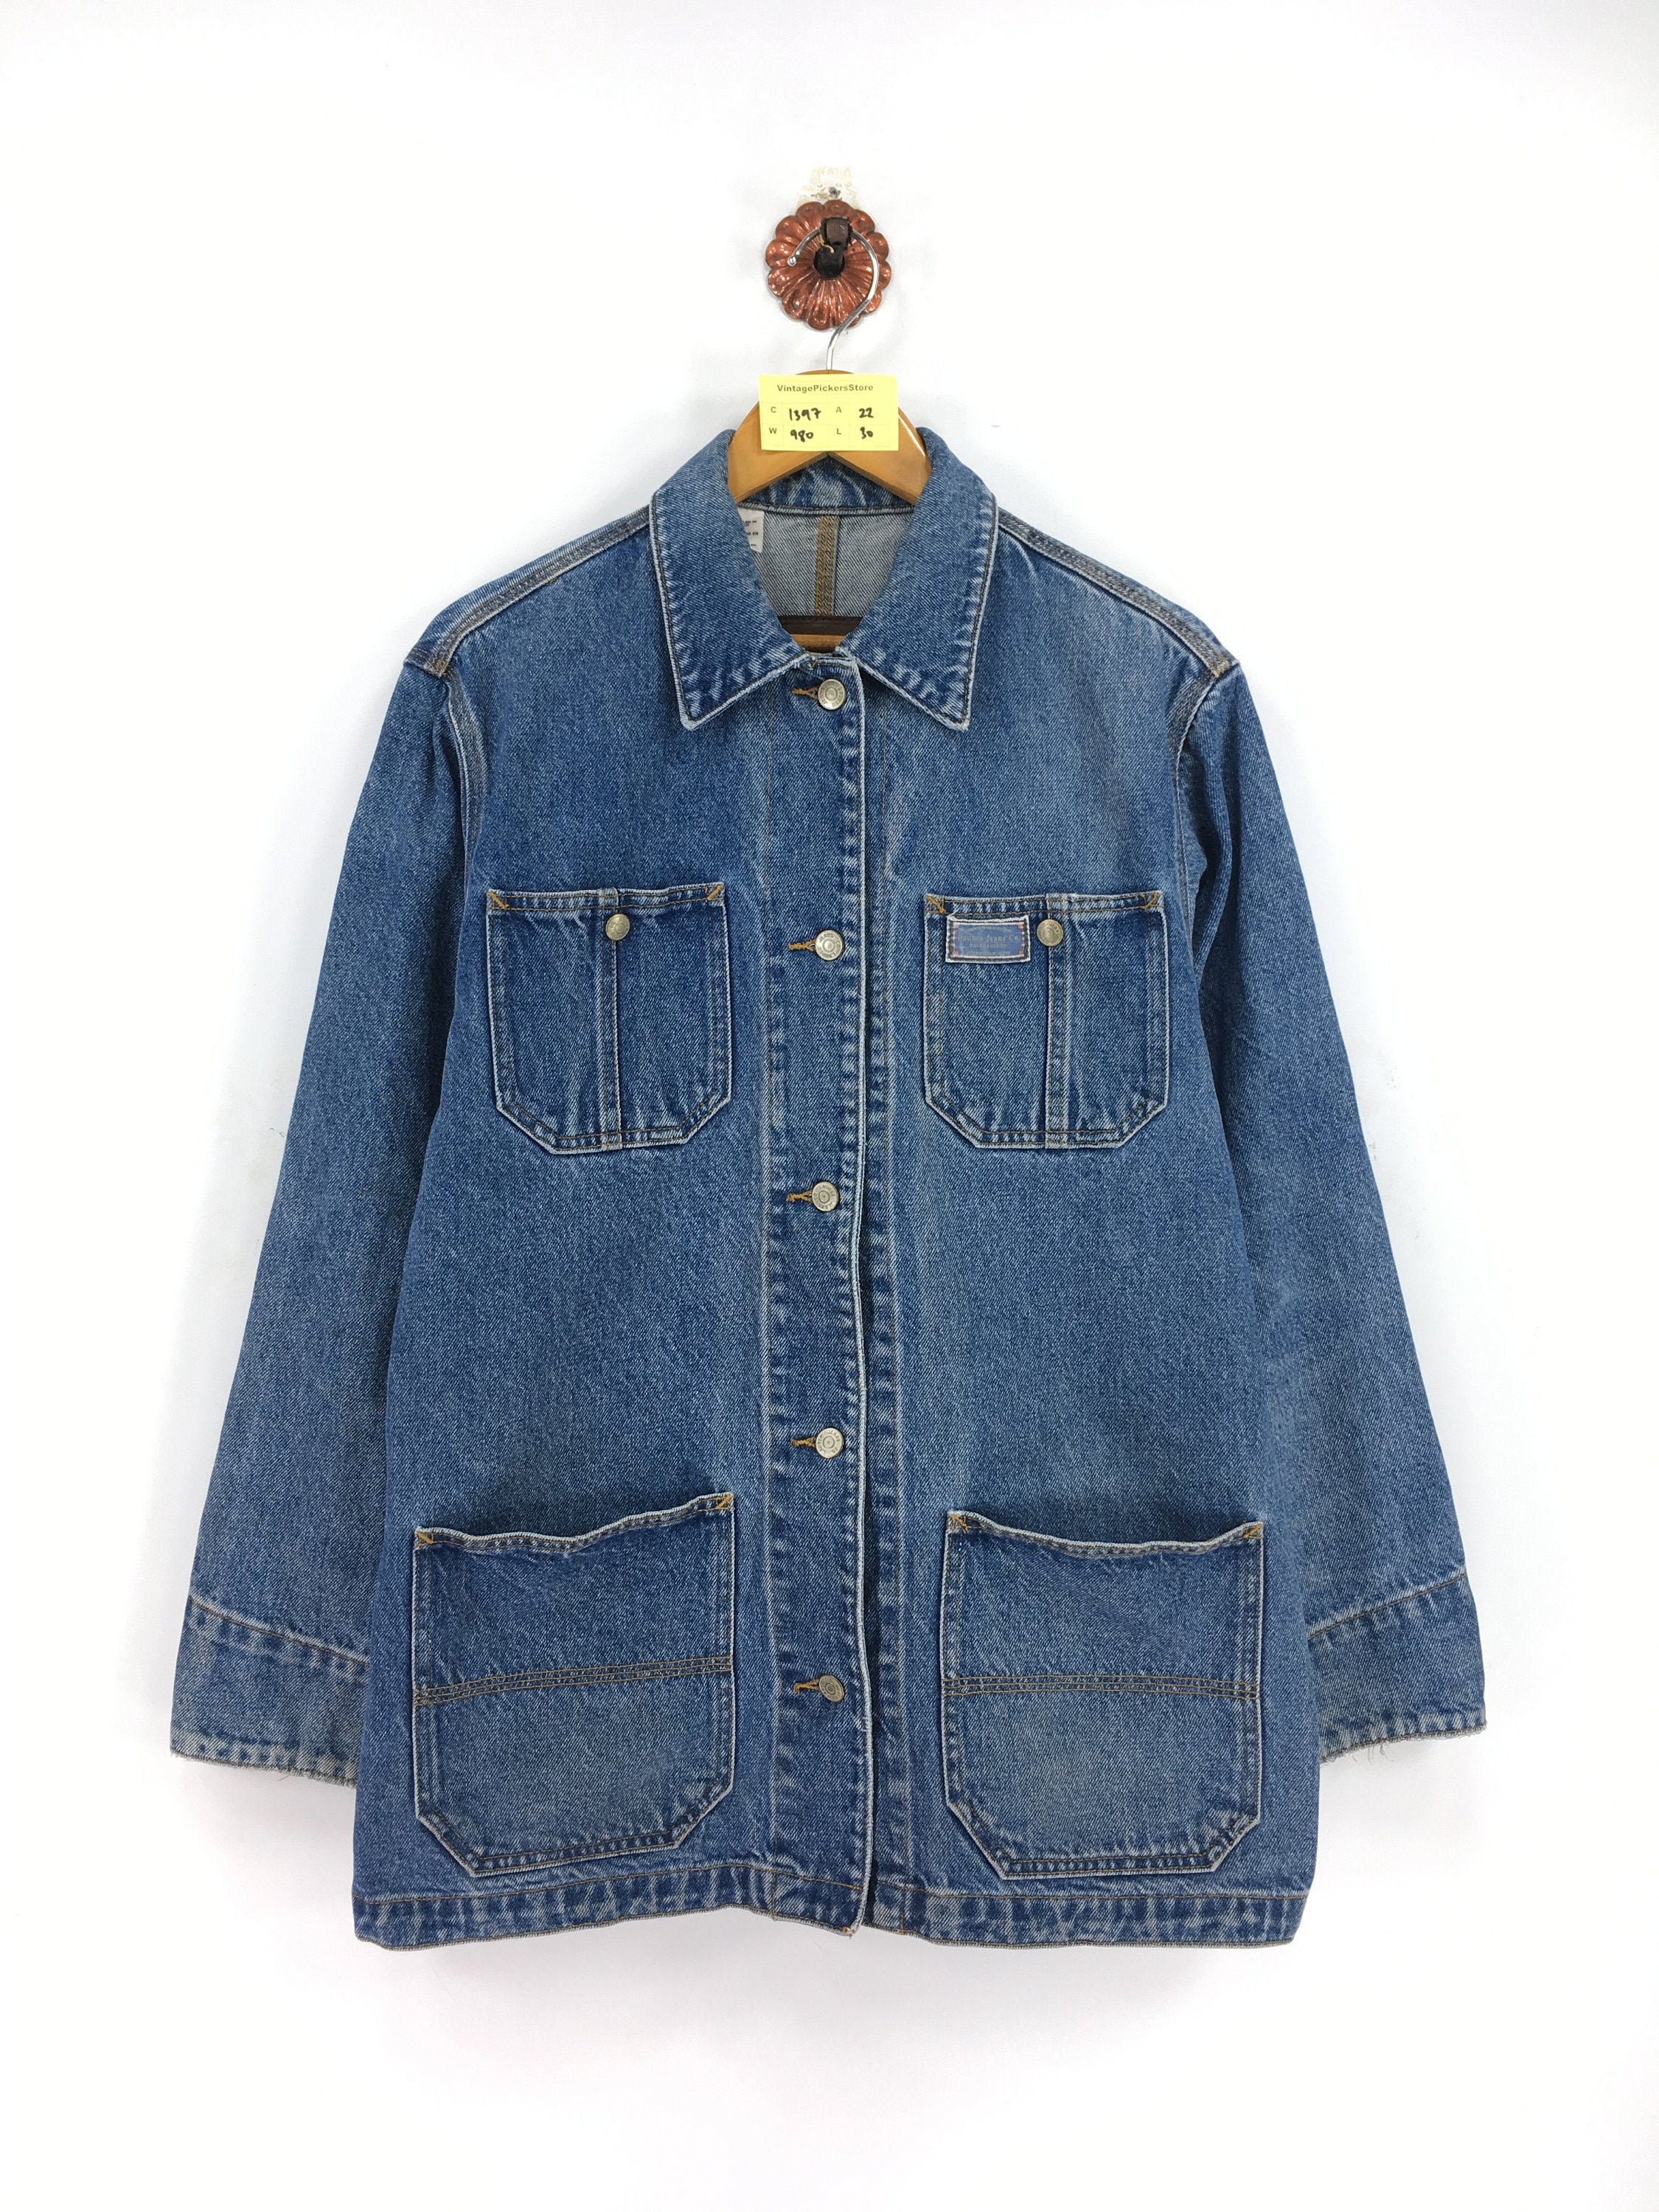 Kleding Gender-neutrale kleding volwassenen Jacks en jassen Jas van Osh Kosh maat groot Vintage jaren 1980 Denim Jacket 